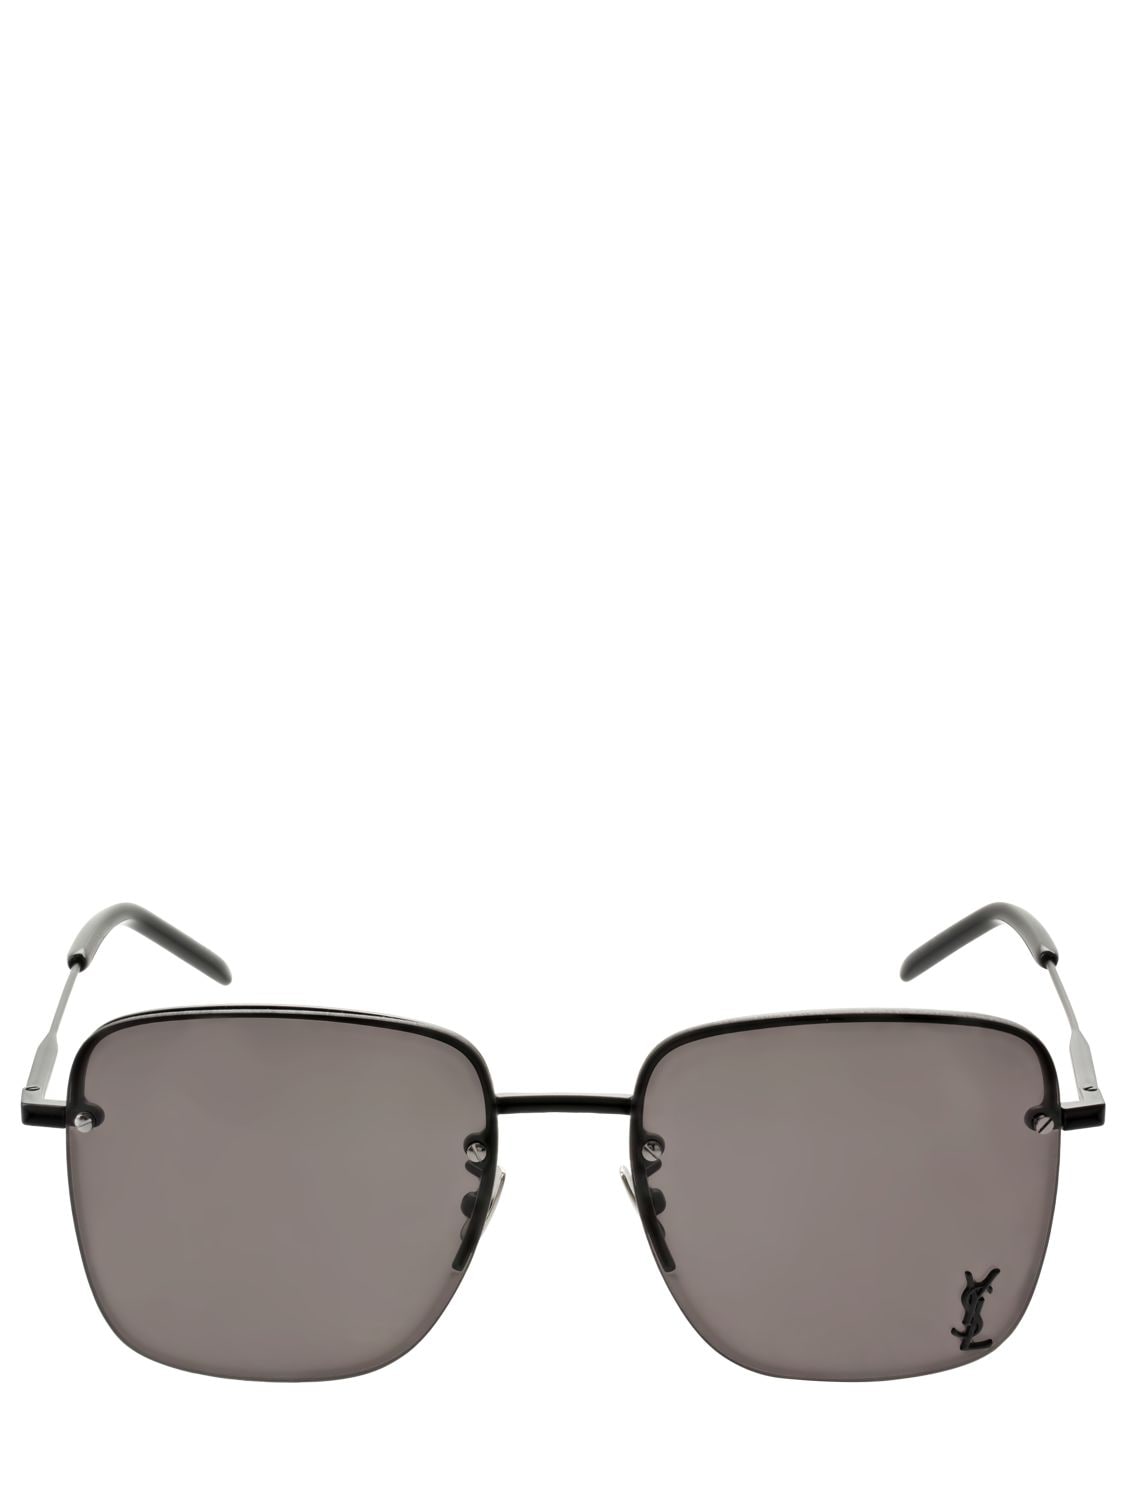 Ysl Sl 312 M Sunglasses